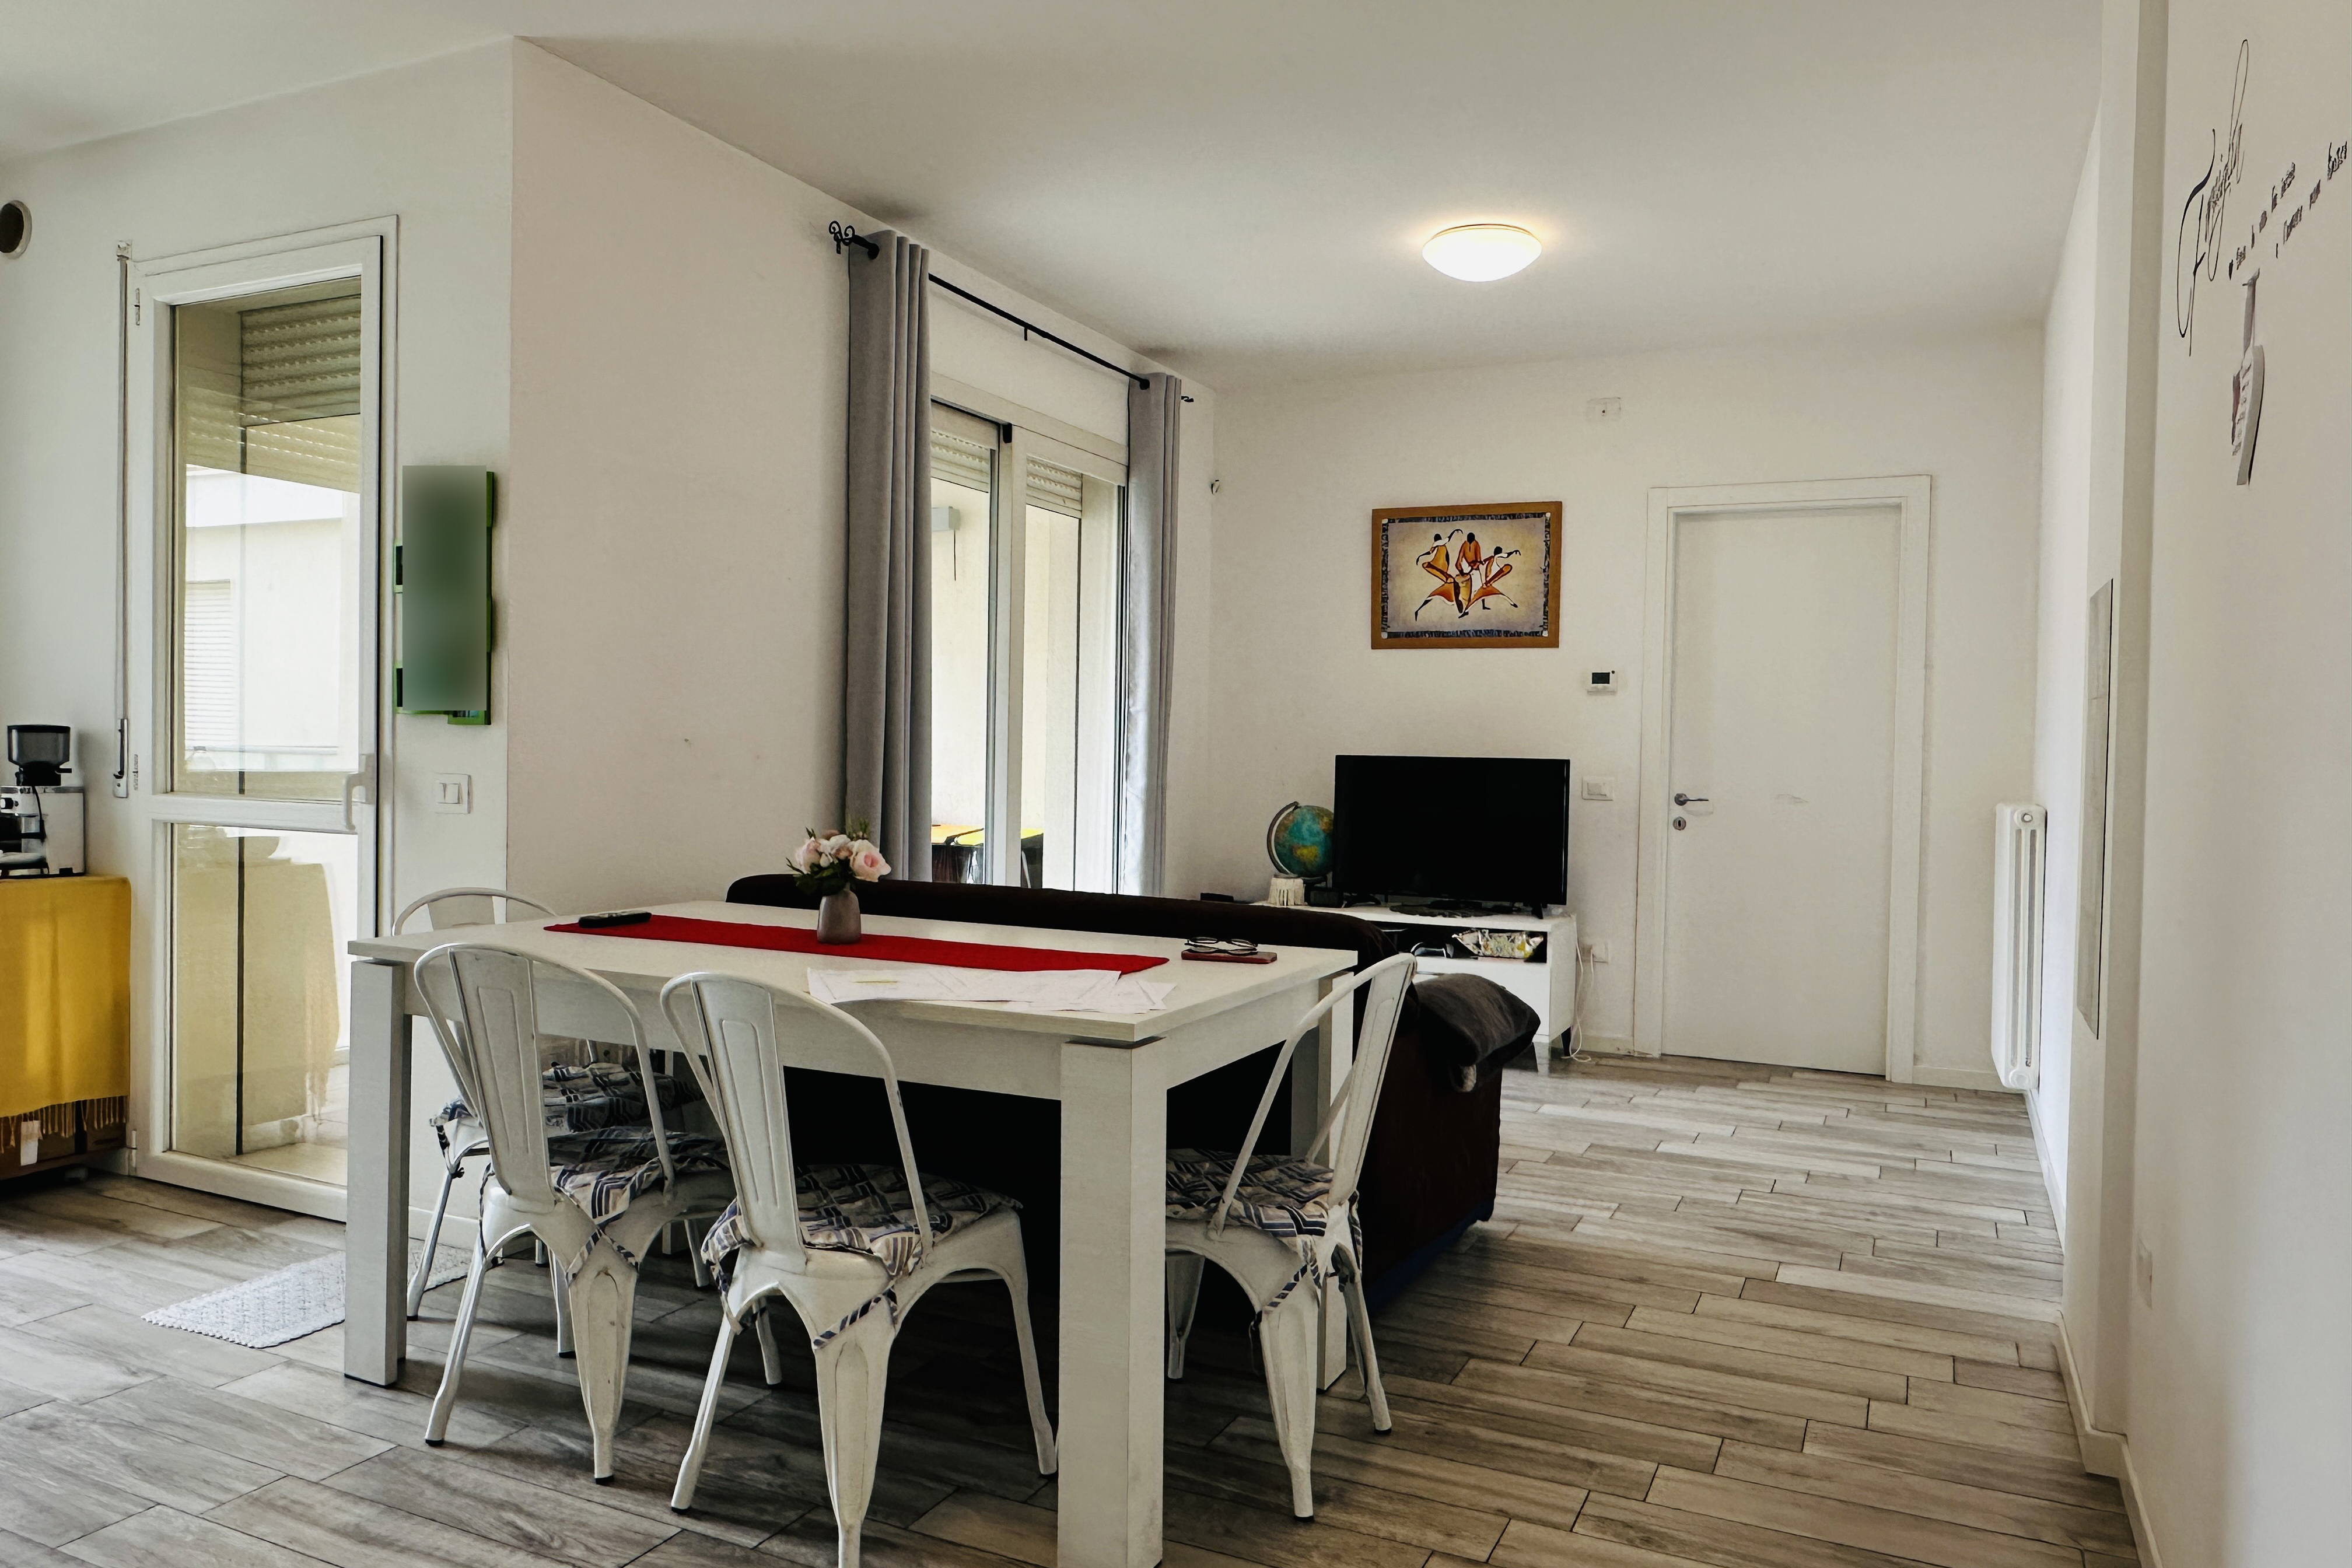 Recente appartamento Pesaro - Zona centro-mare (AP822)